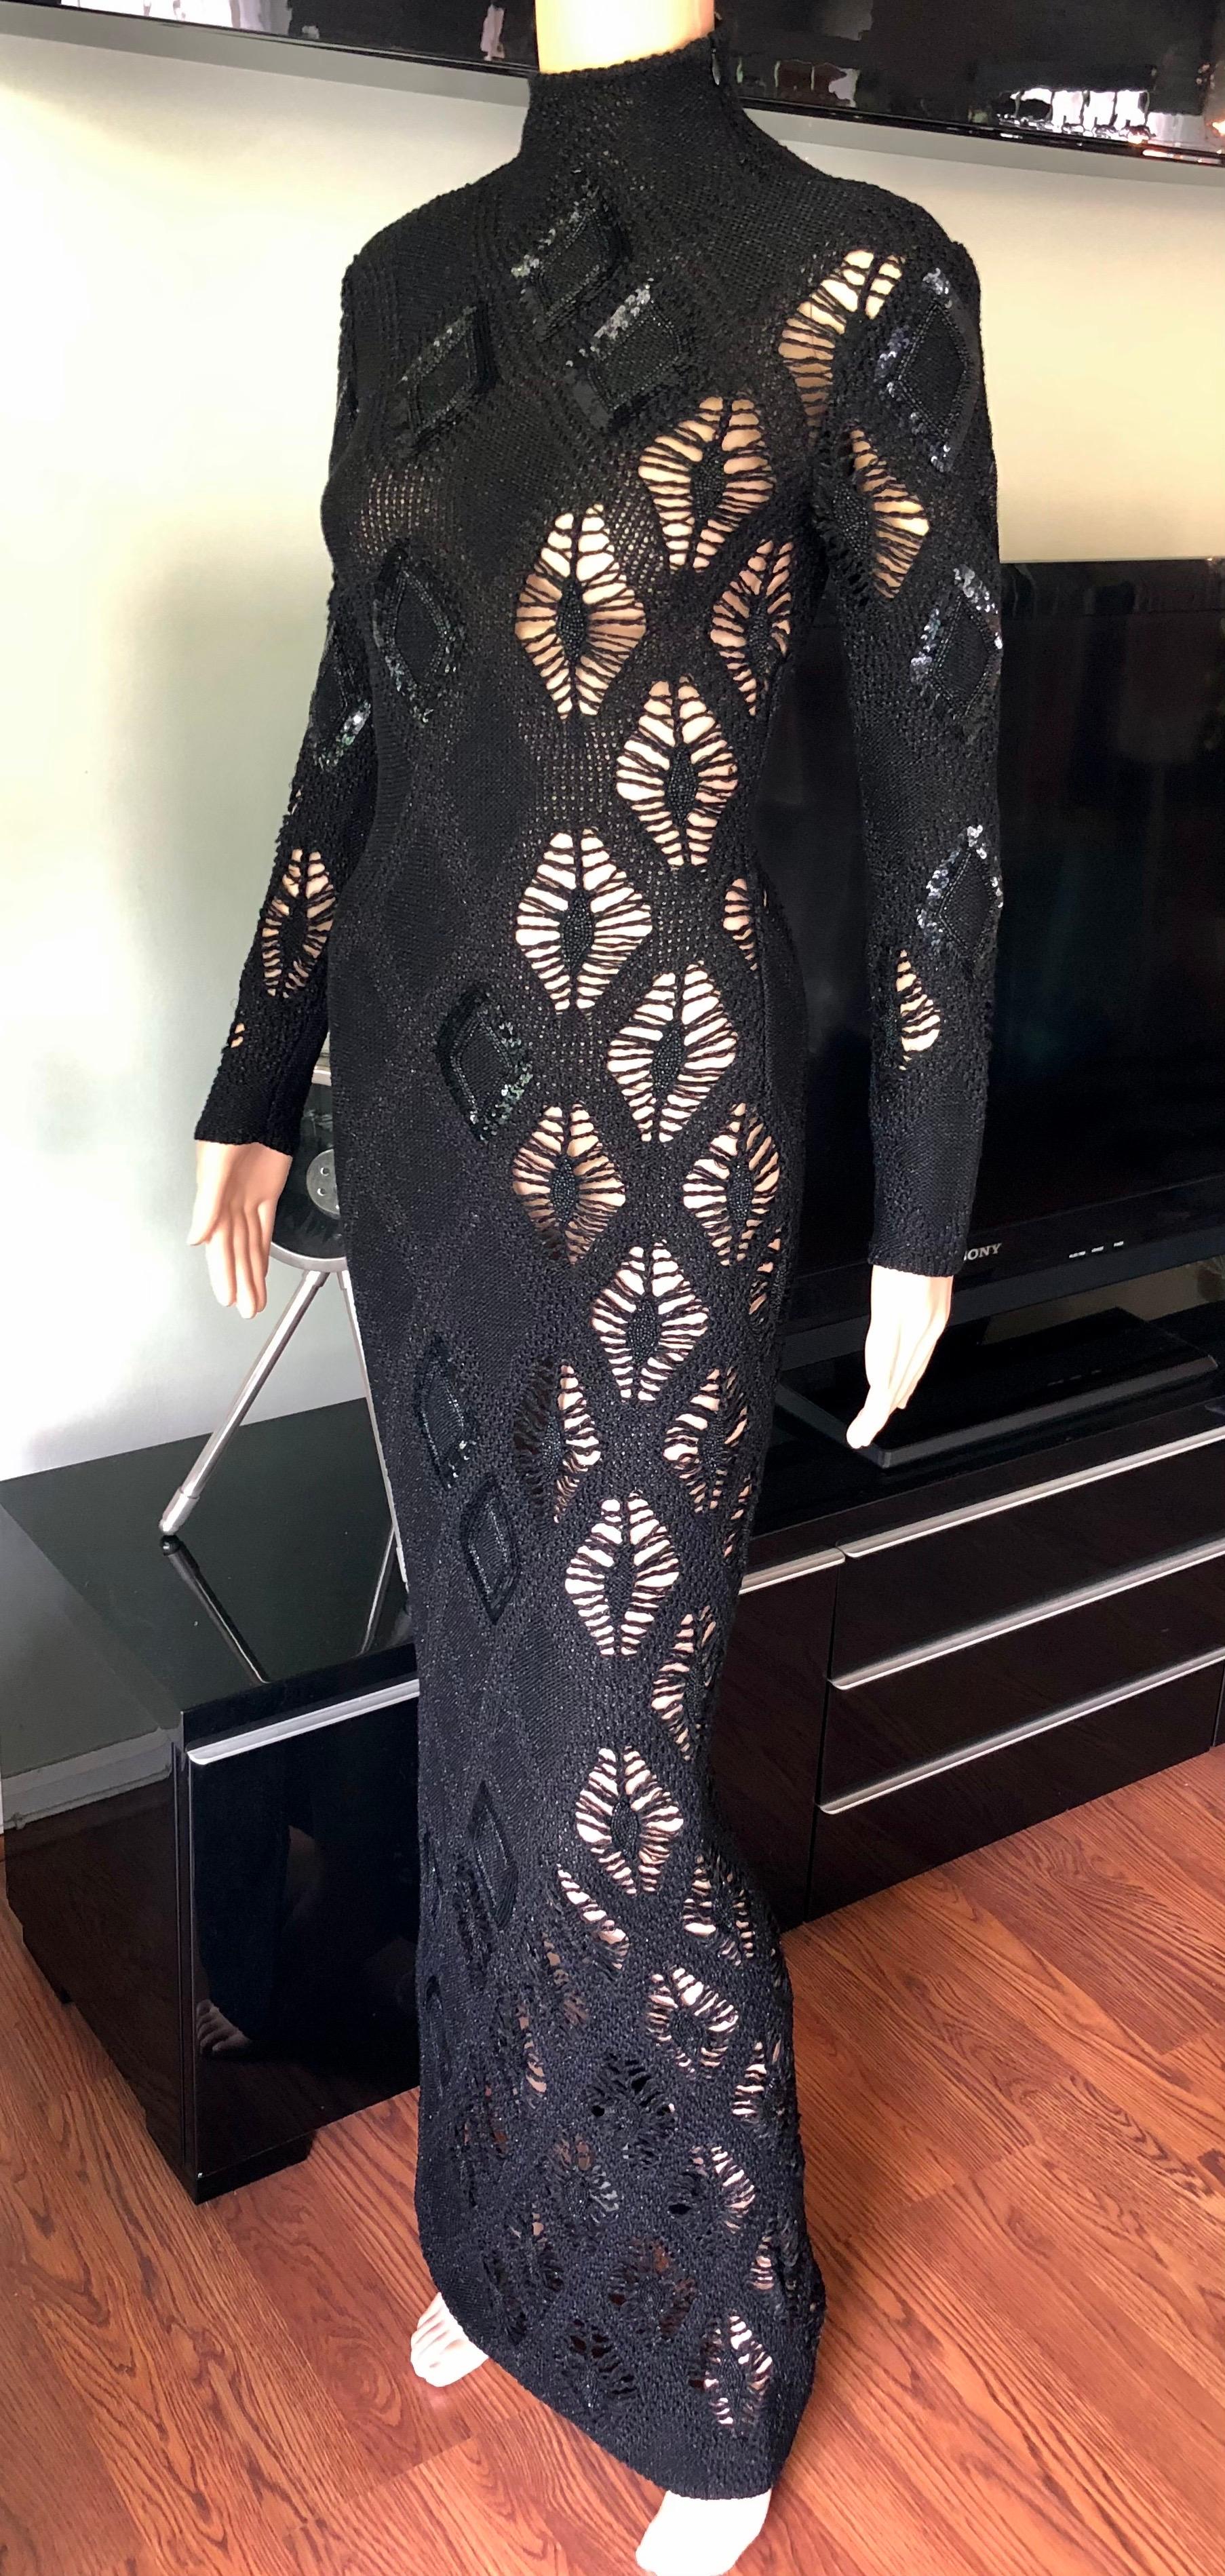 Women's Gianfranco Ferre S/S 2002 Beaded Sequin Sheer Crochet Knit Black Maxi Dress Gown For Sale